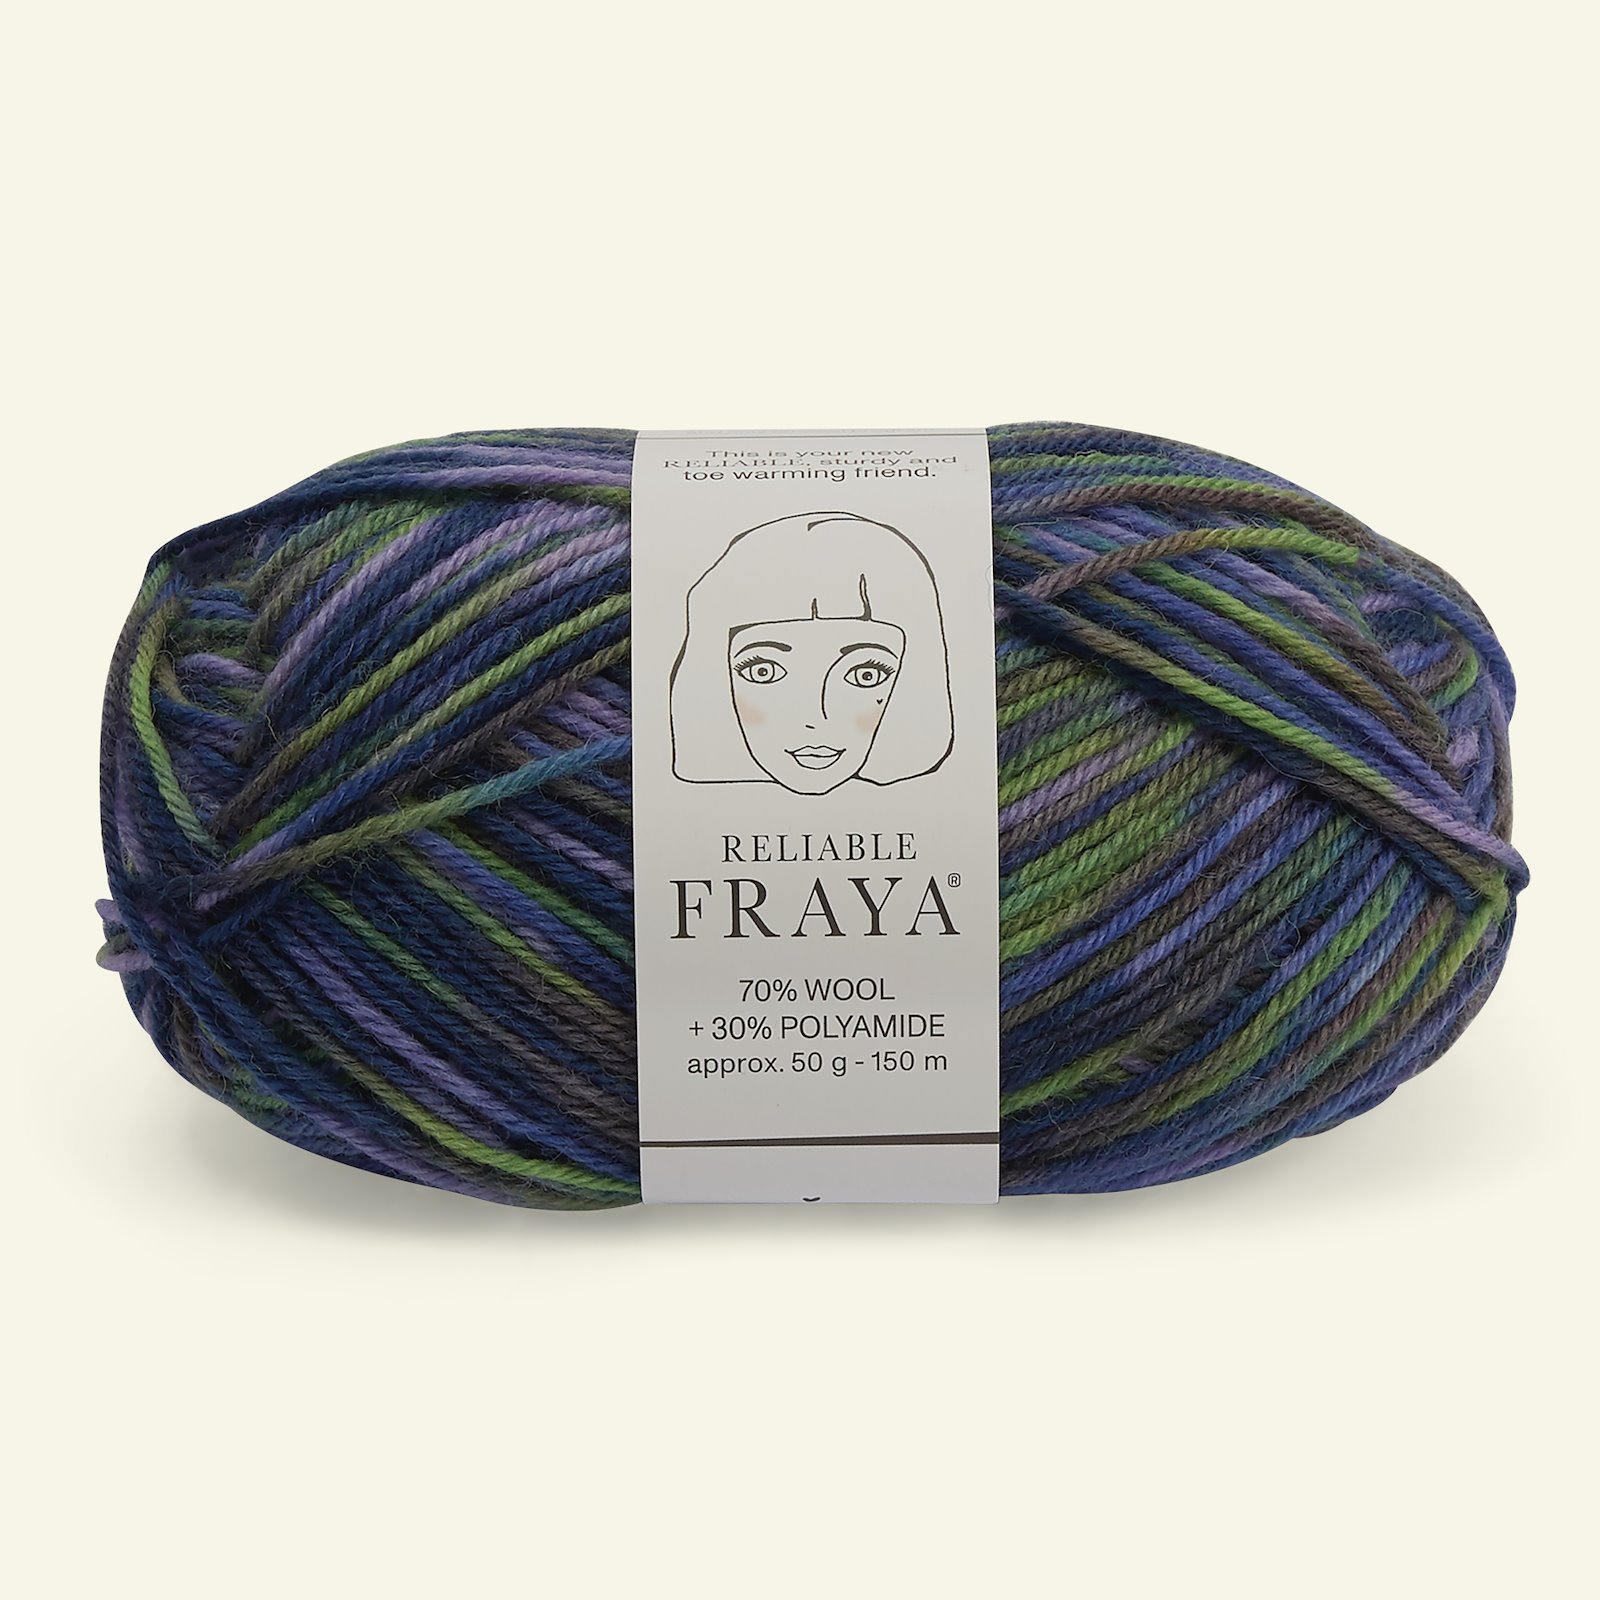 FRAYA, wool yarn "Reliable", green/purplw mix col. 90001202_pack